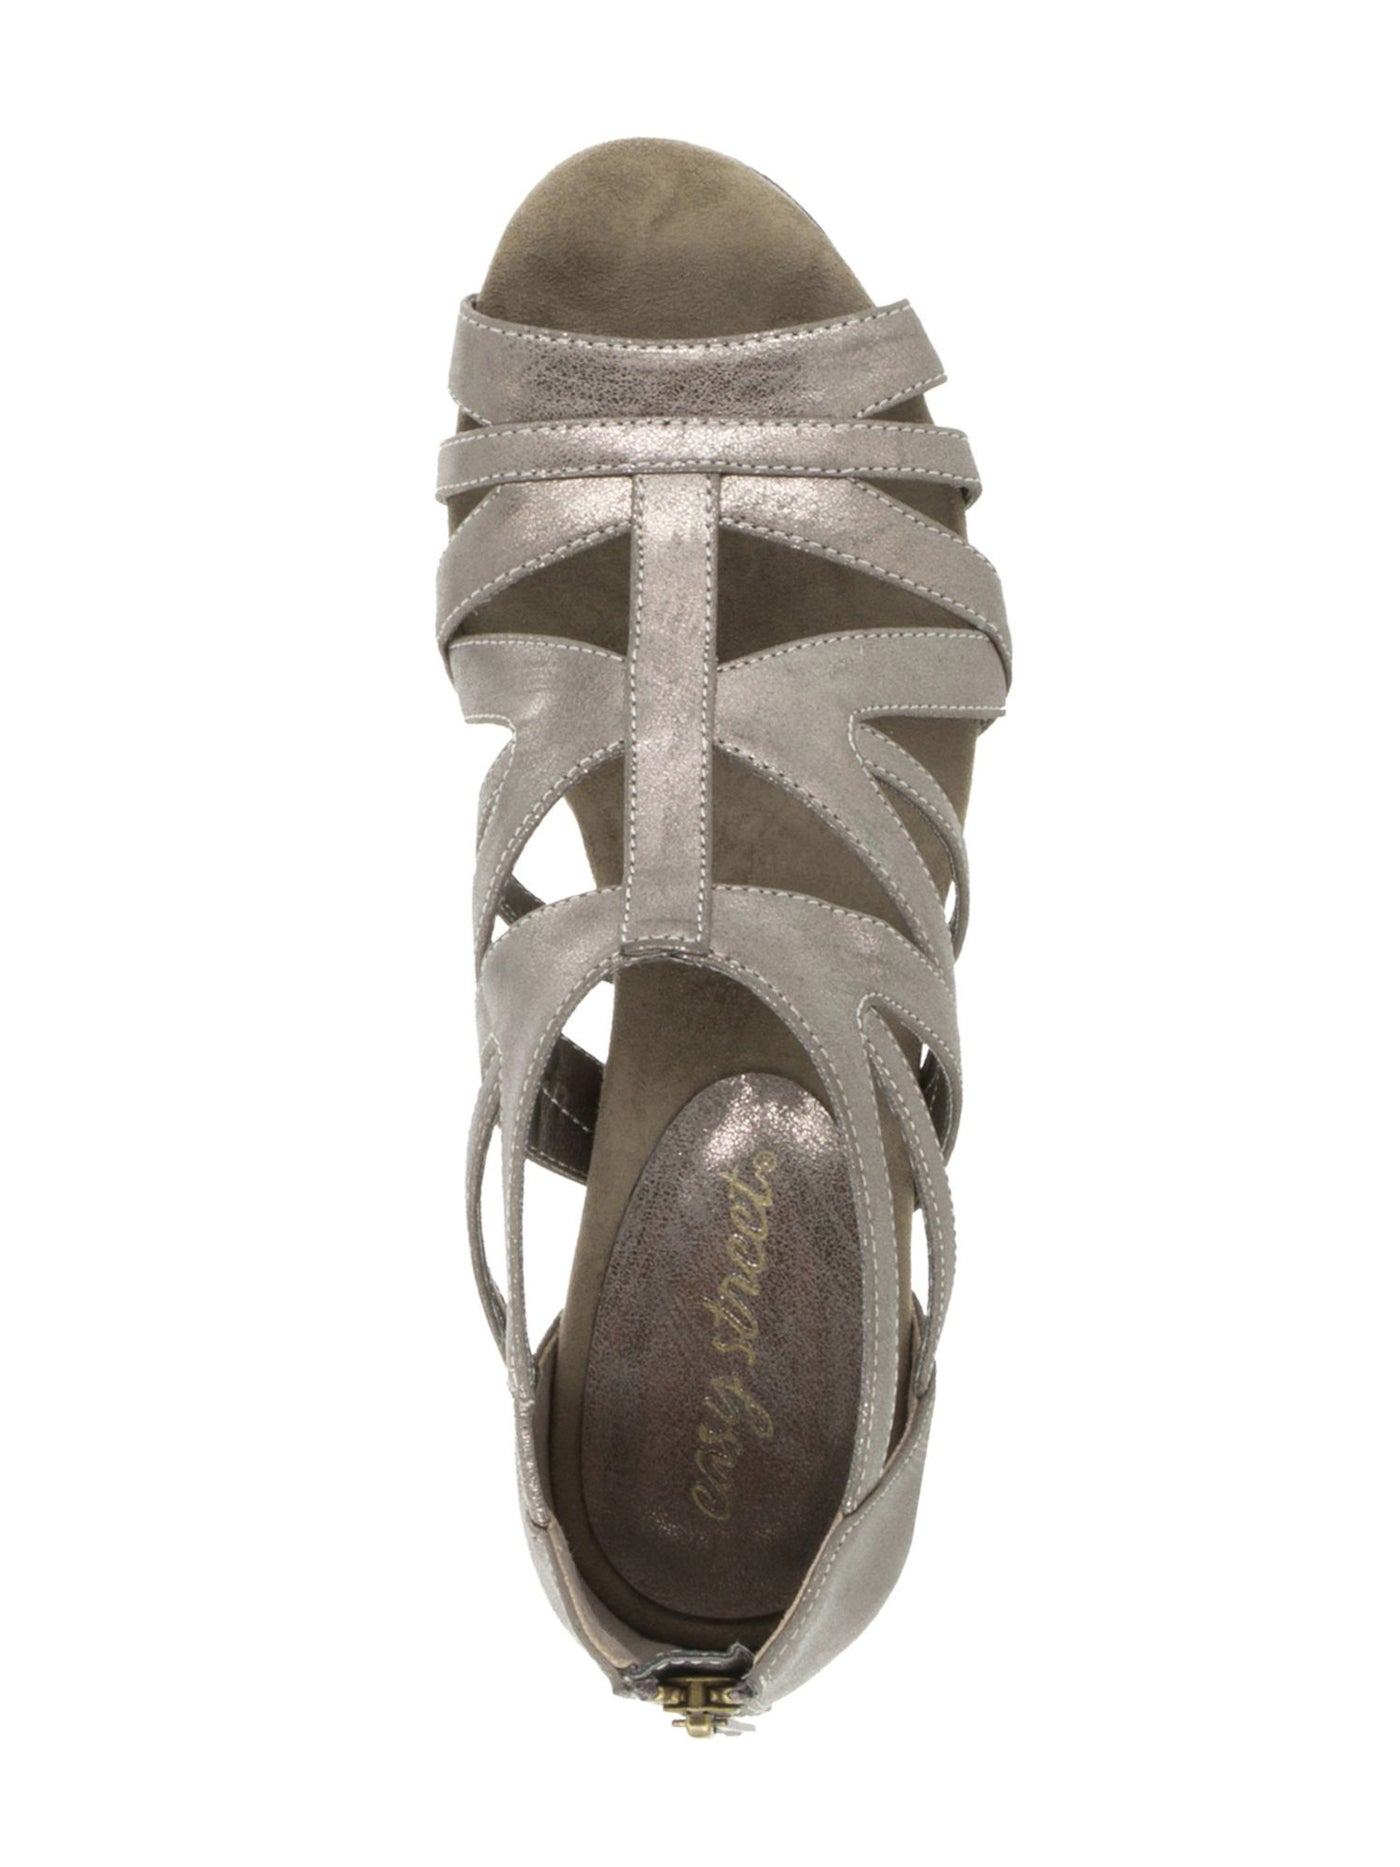 EASY STREET Womens White Silver Stretch Gore Strappy Treaded Amaze Open Toe Block Heel Zip-Up Dress Sandals Shoes 10 W